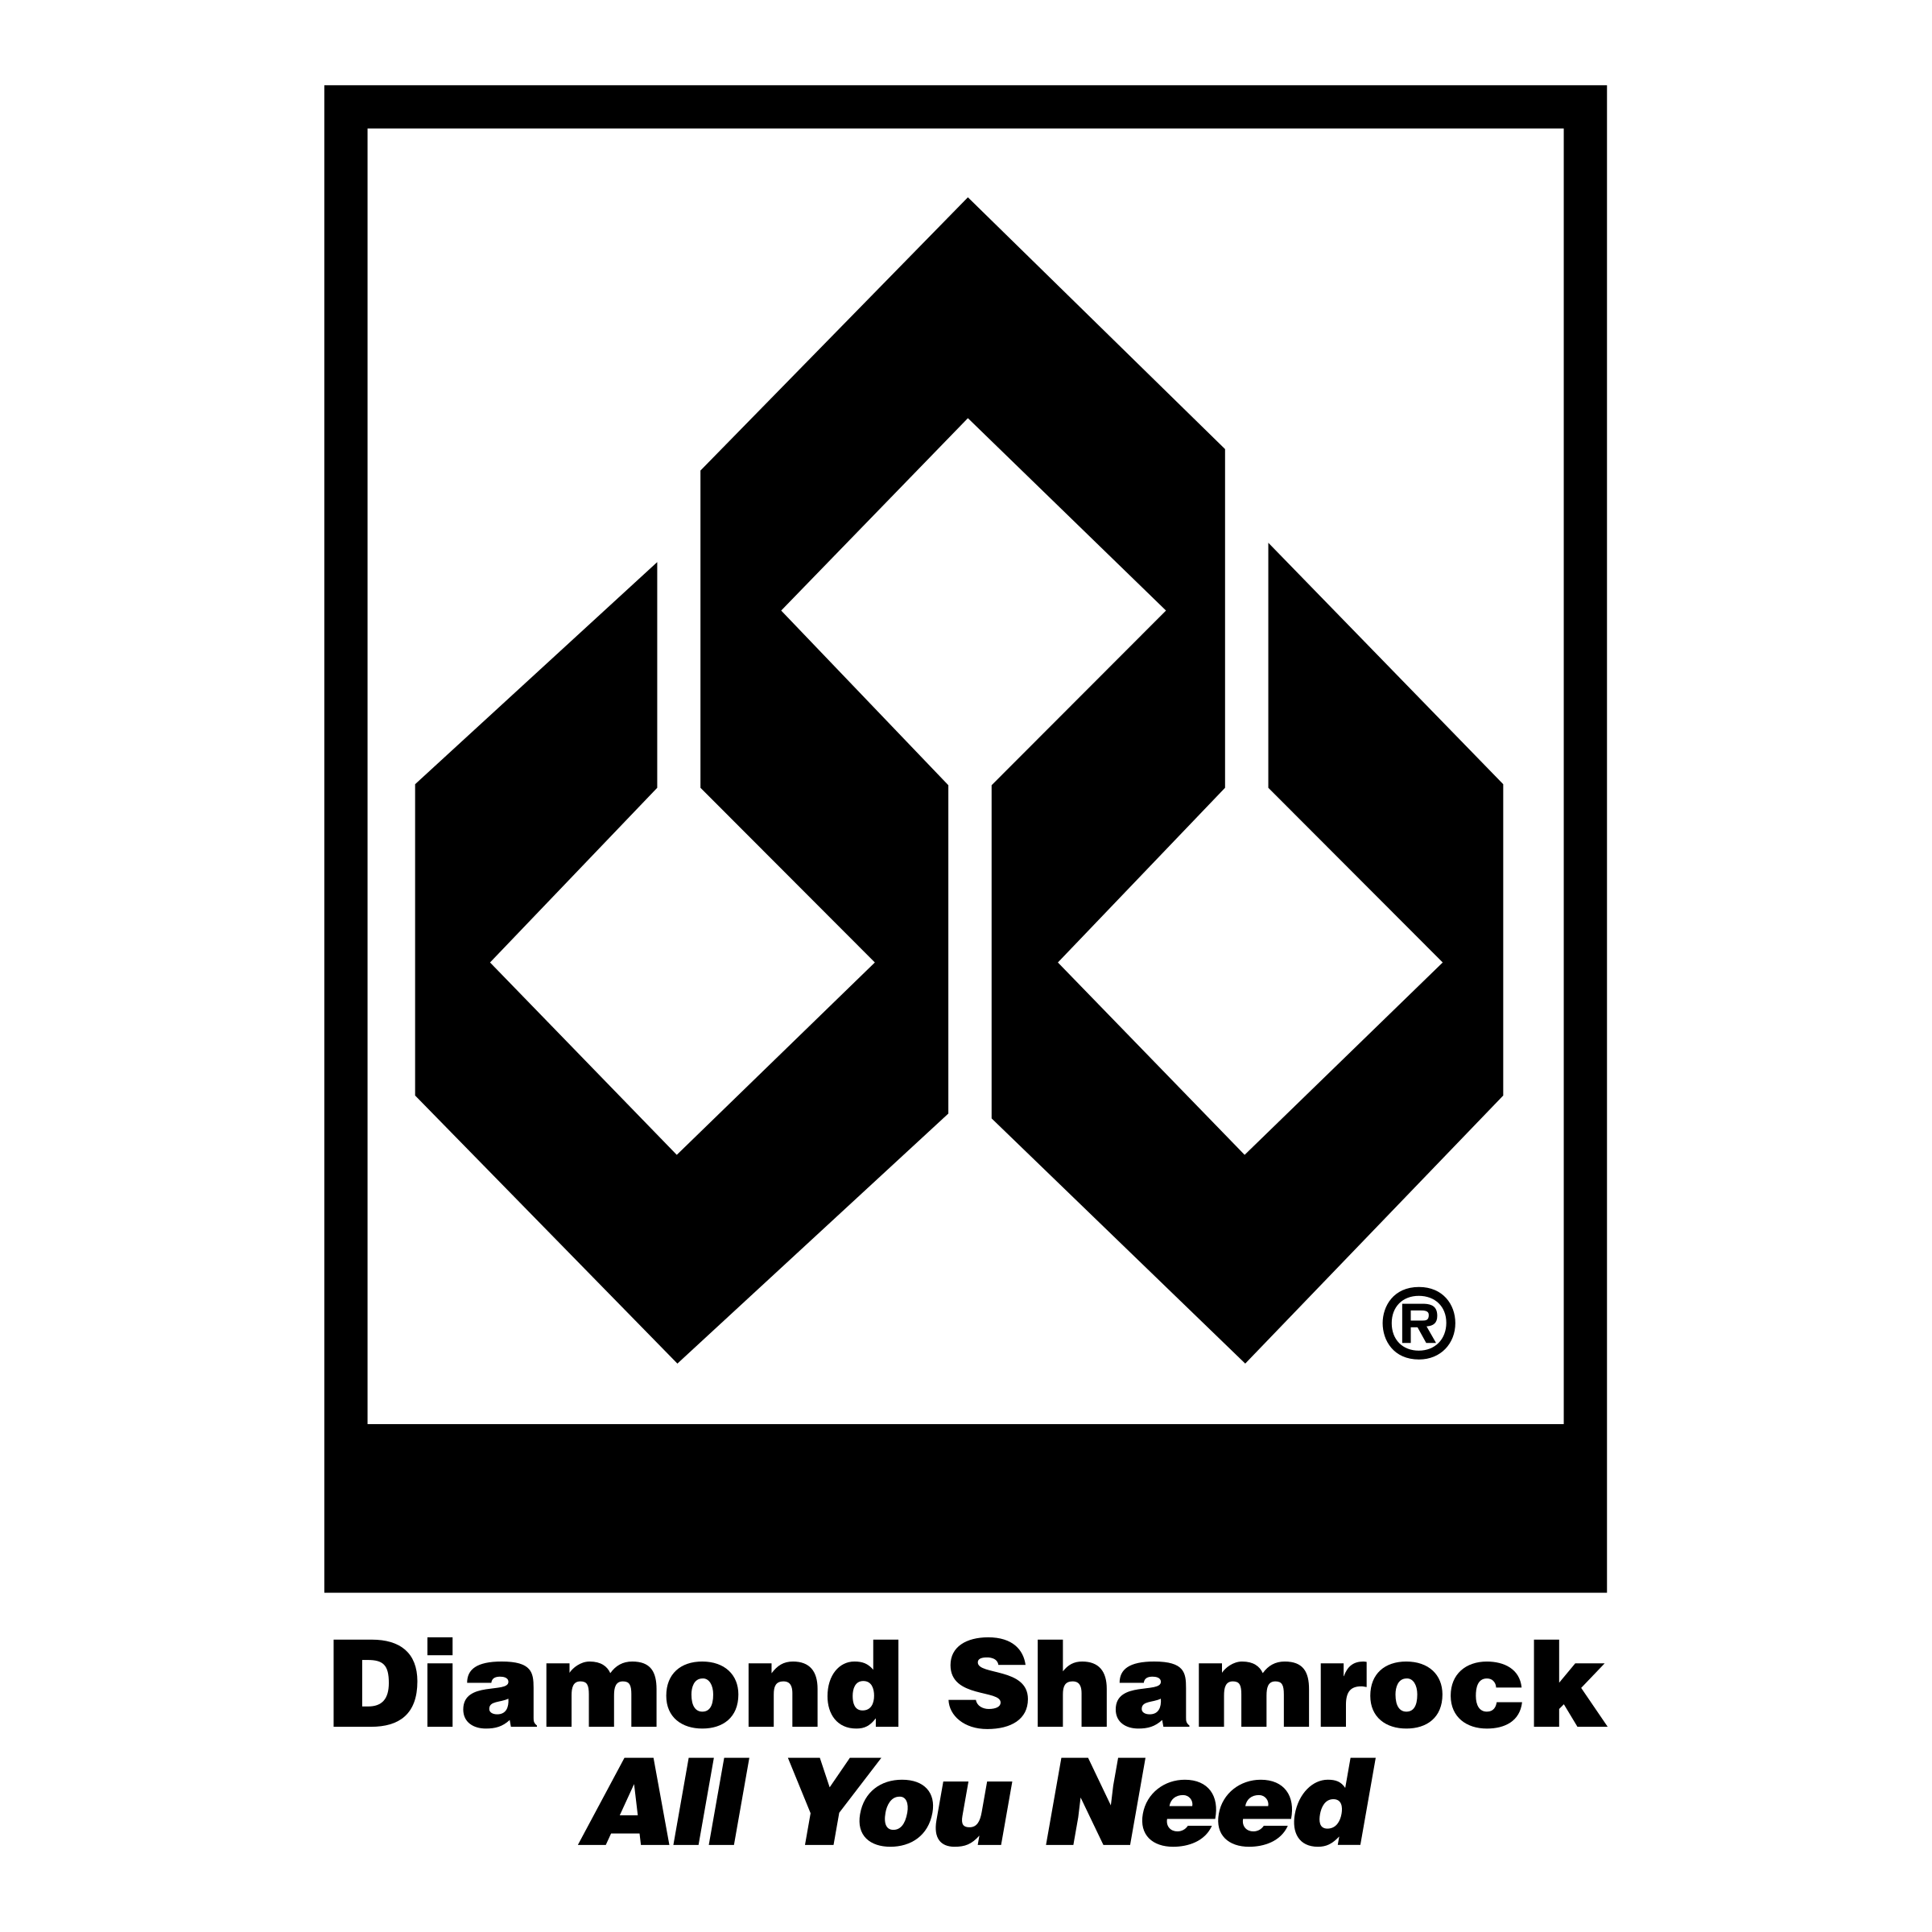 Diamond Transparent Logo - Diamond Shamrock Logo PNG Transparent & SVG Vector